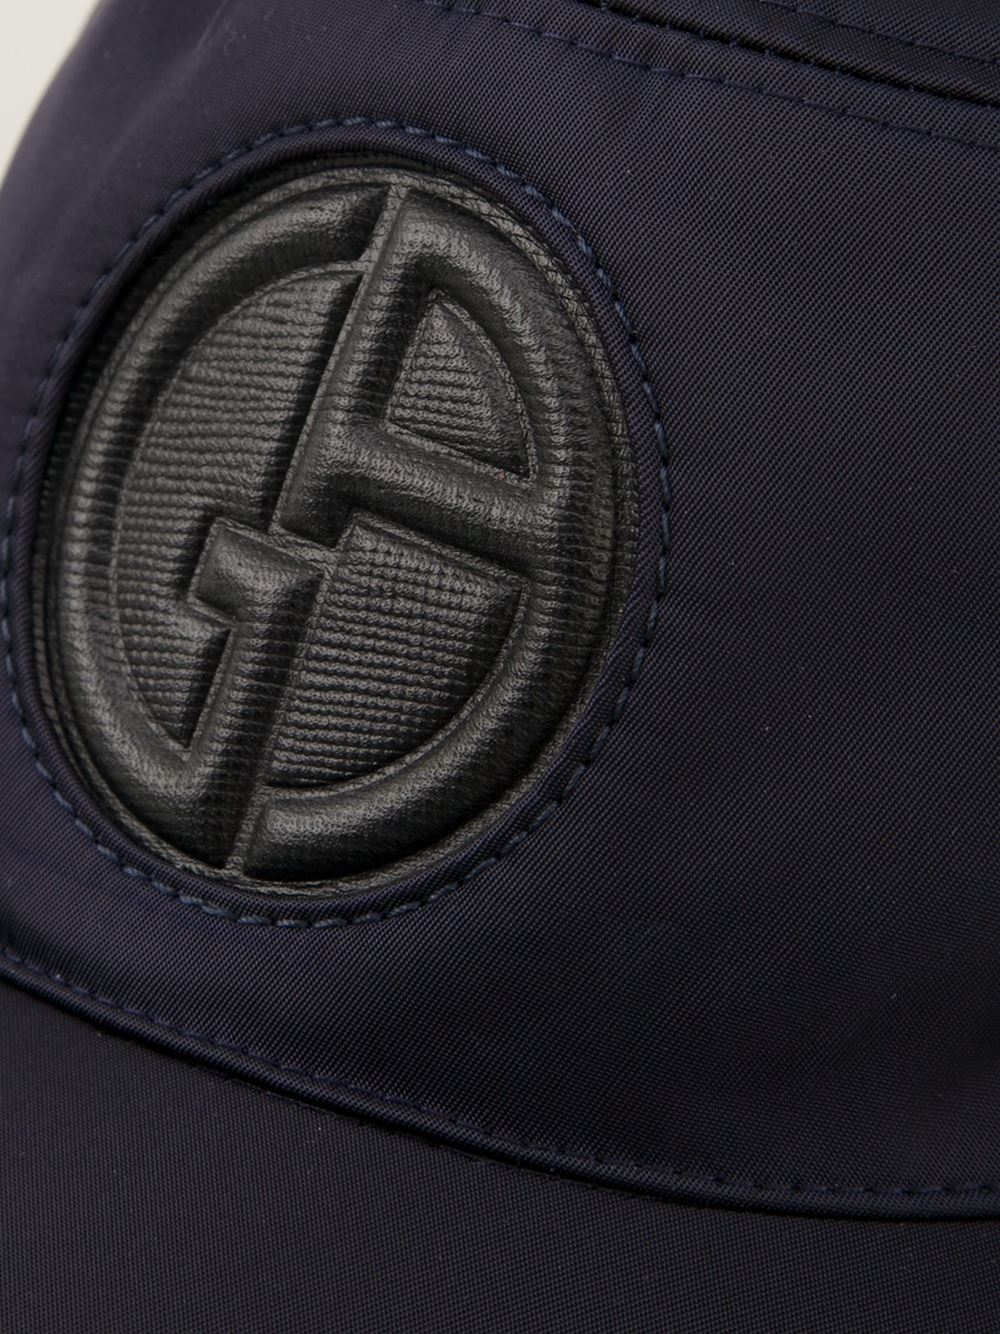 Giorgio Armani Logo Baseball Cap in Blue for Men - Lyst